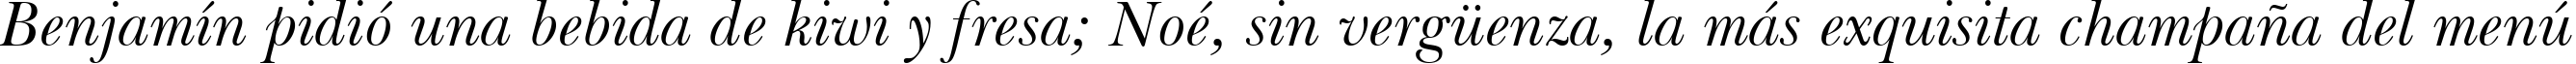 Пример написания шрифтом Baskerville Italic Win95BT текста на испанском